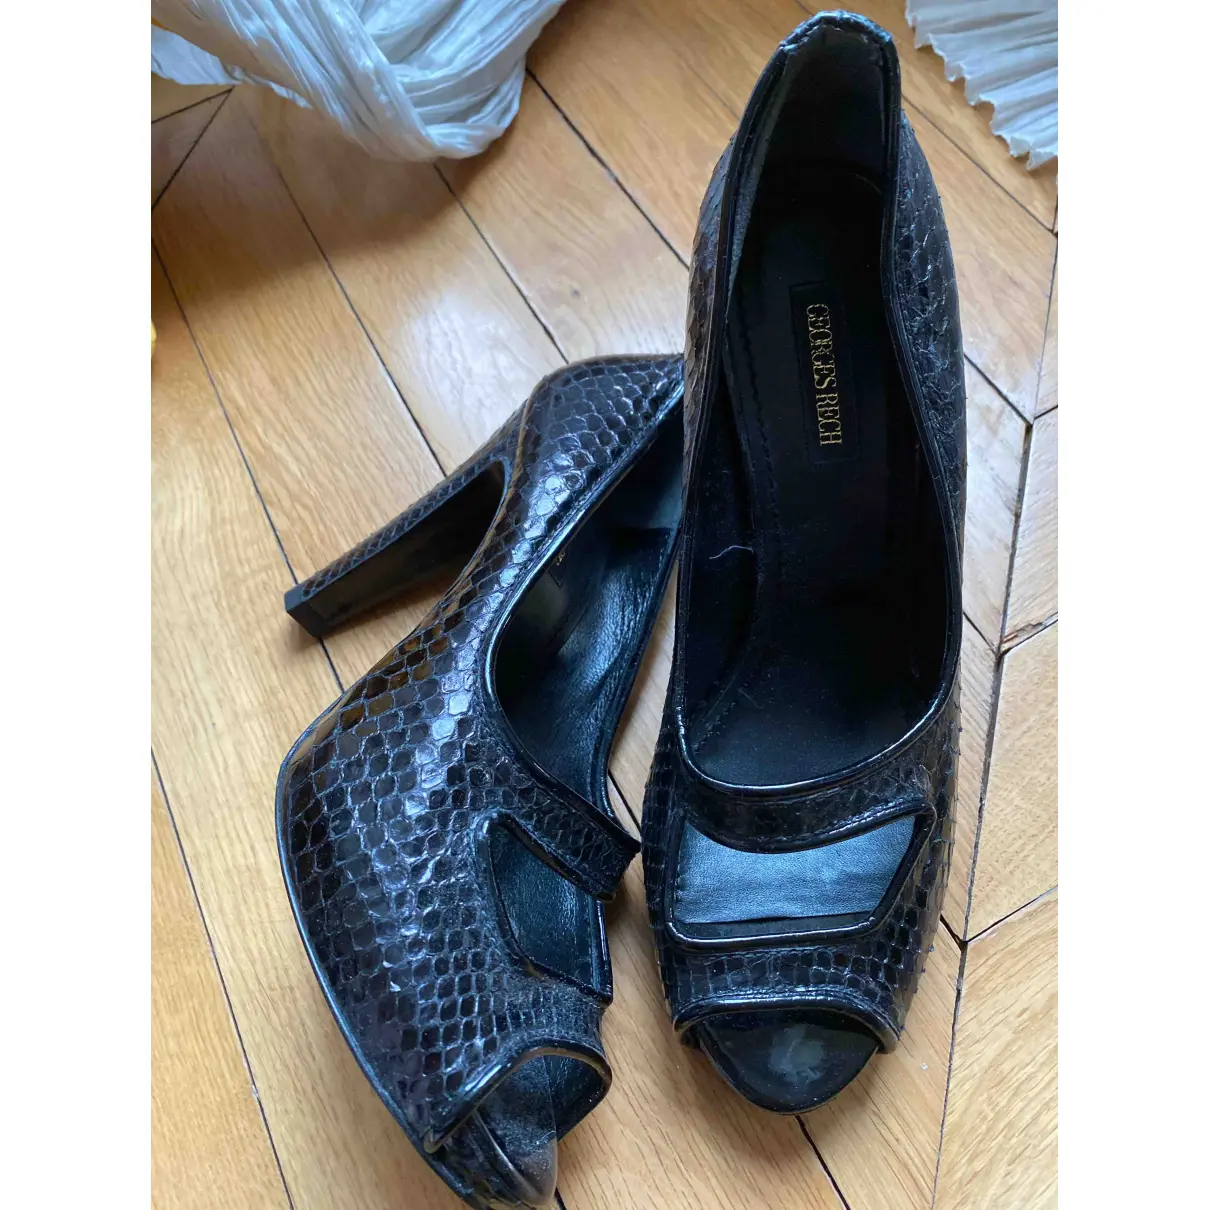 Buy Georges Rech Leather heels online